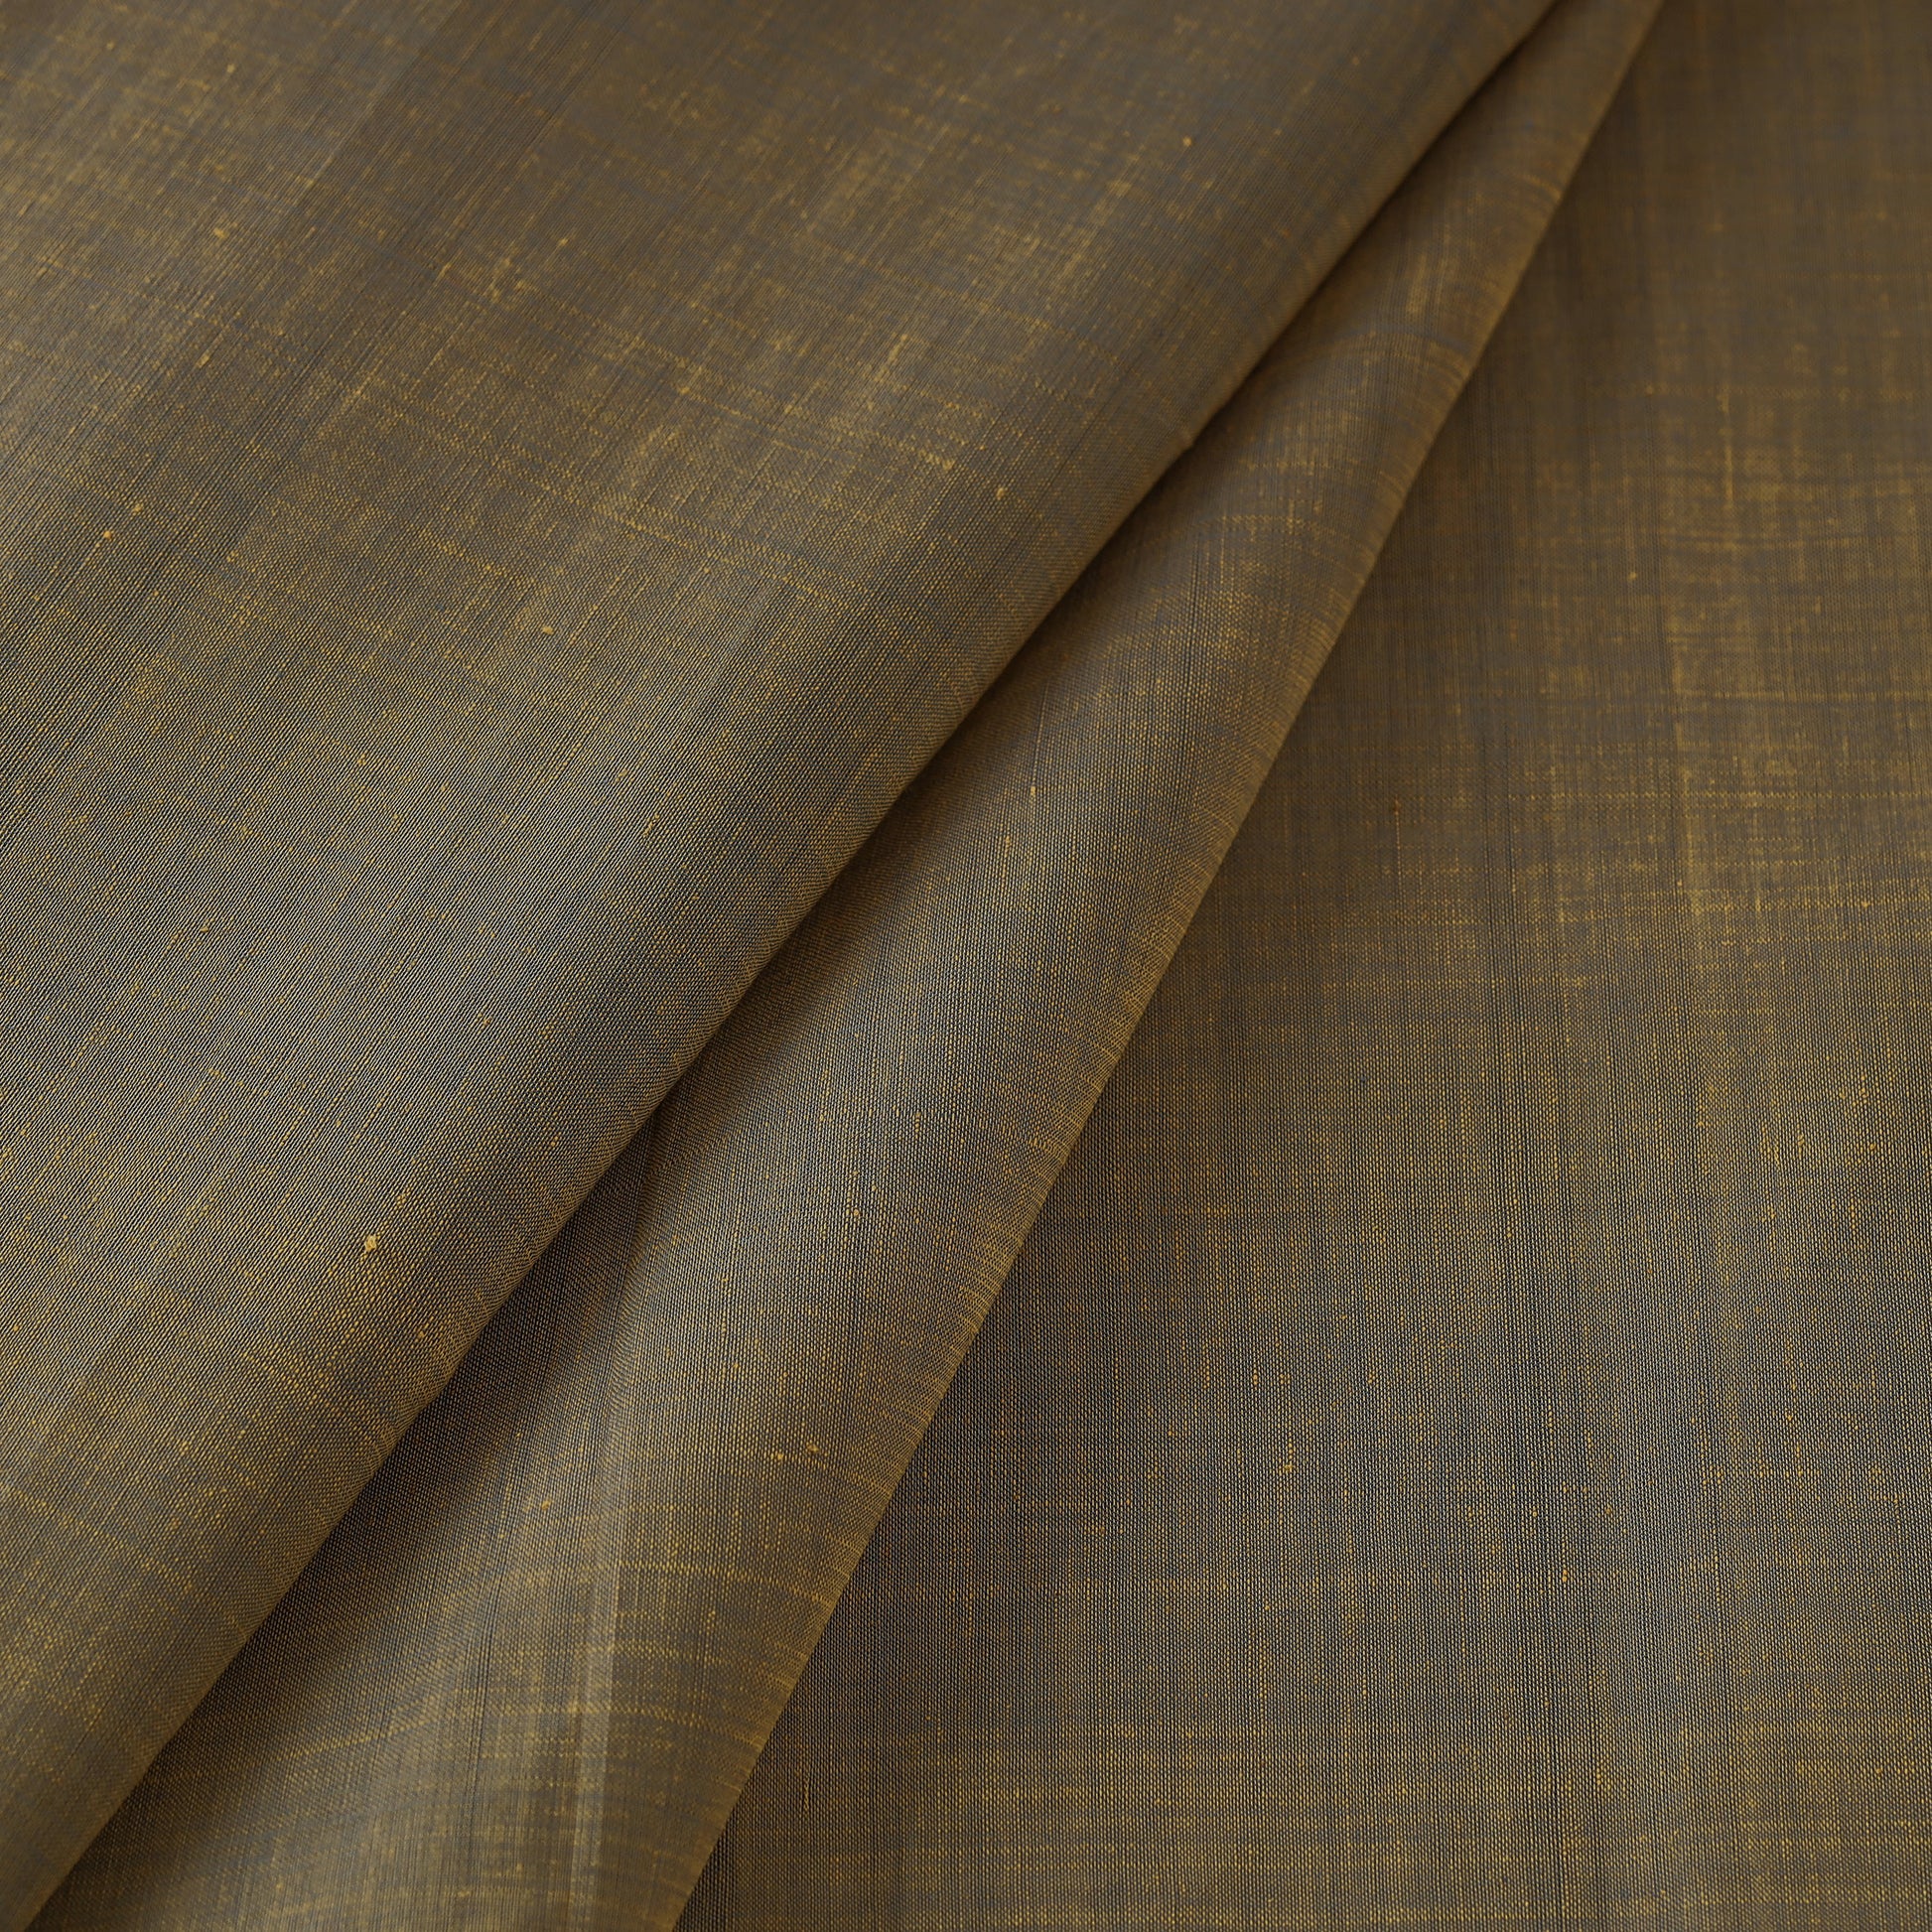 Plain Mangalagiri Handloom Fabrics